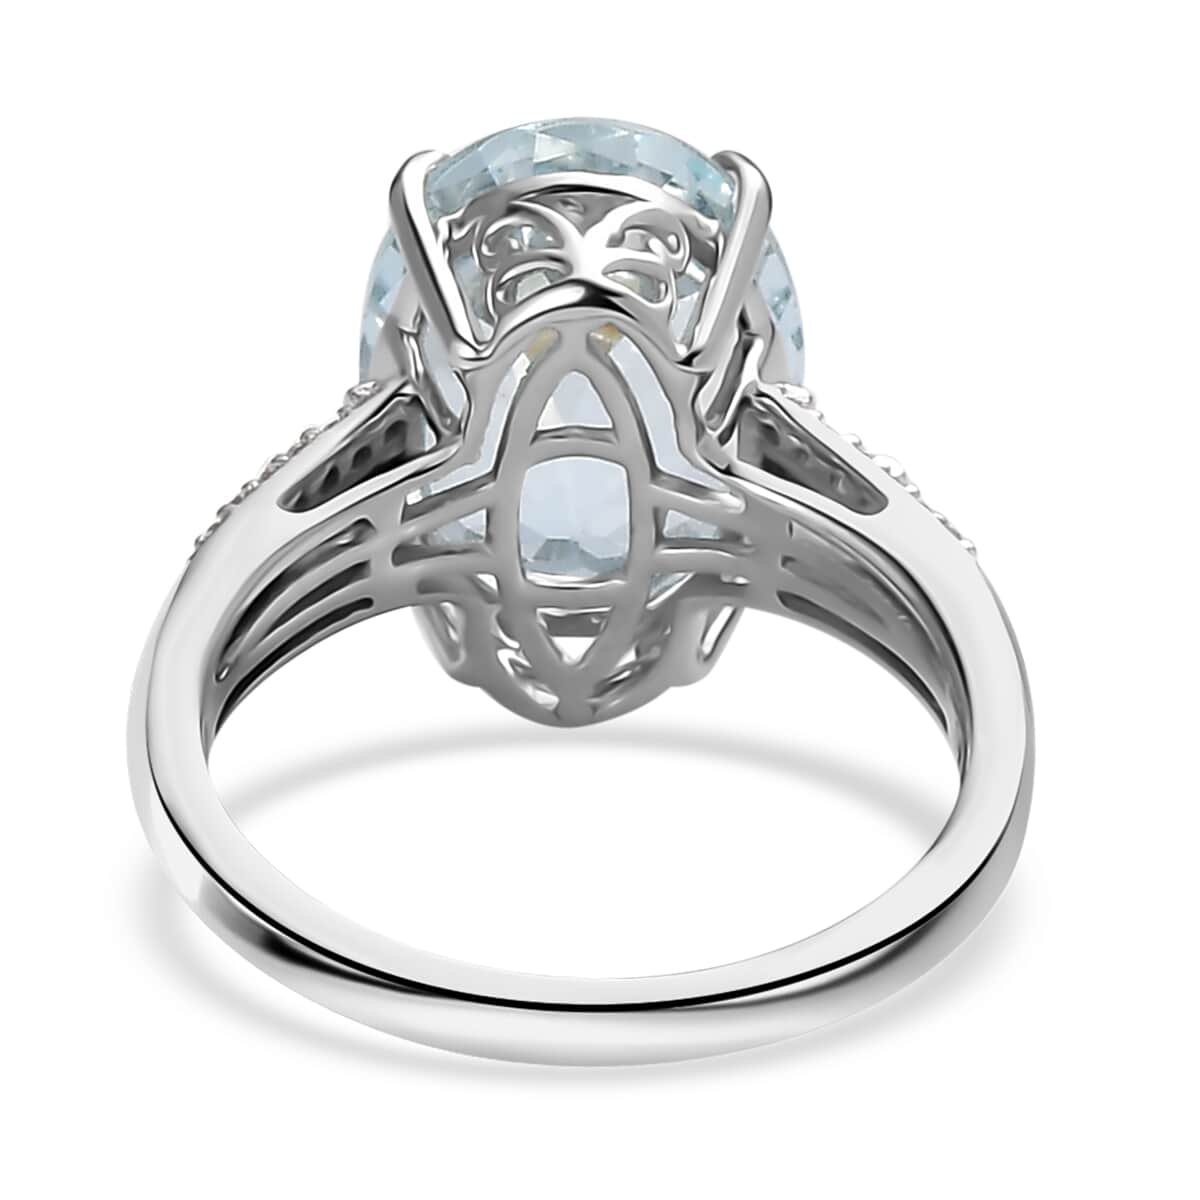 Luxoro 10K White Gold Premium Mangoro Aquamarine, Diamond (G-H, I3) Ring (Size 10.0) 5.15 ctw image number 4